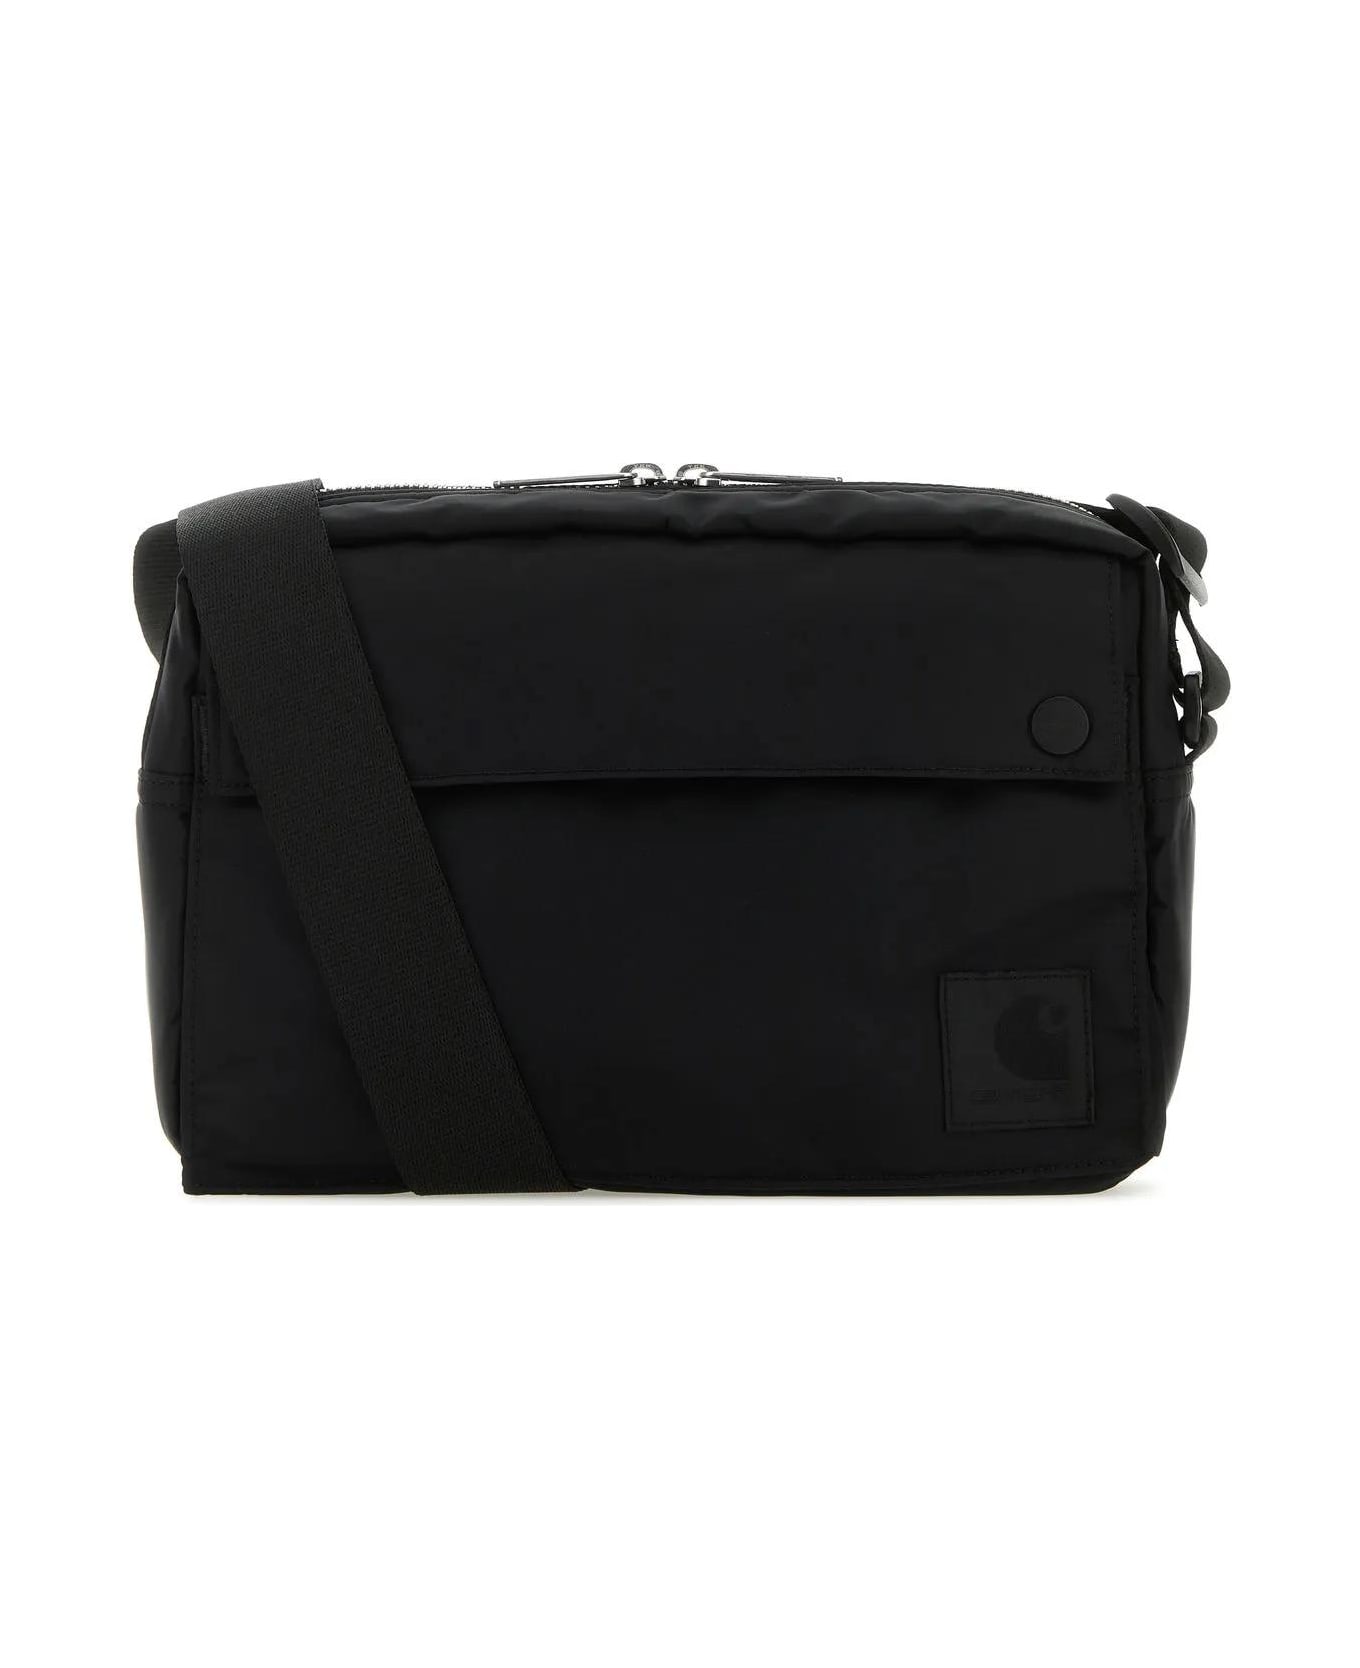 Carhartt Black Fabric Otley Shoulder Bag - Black